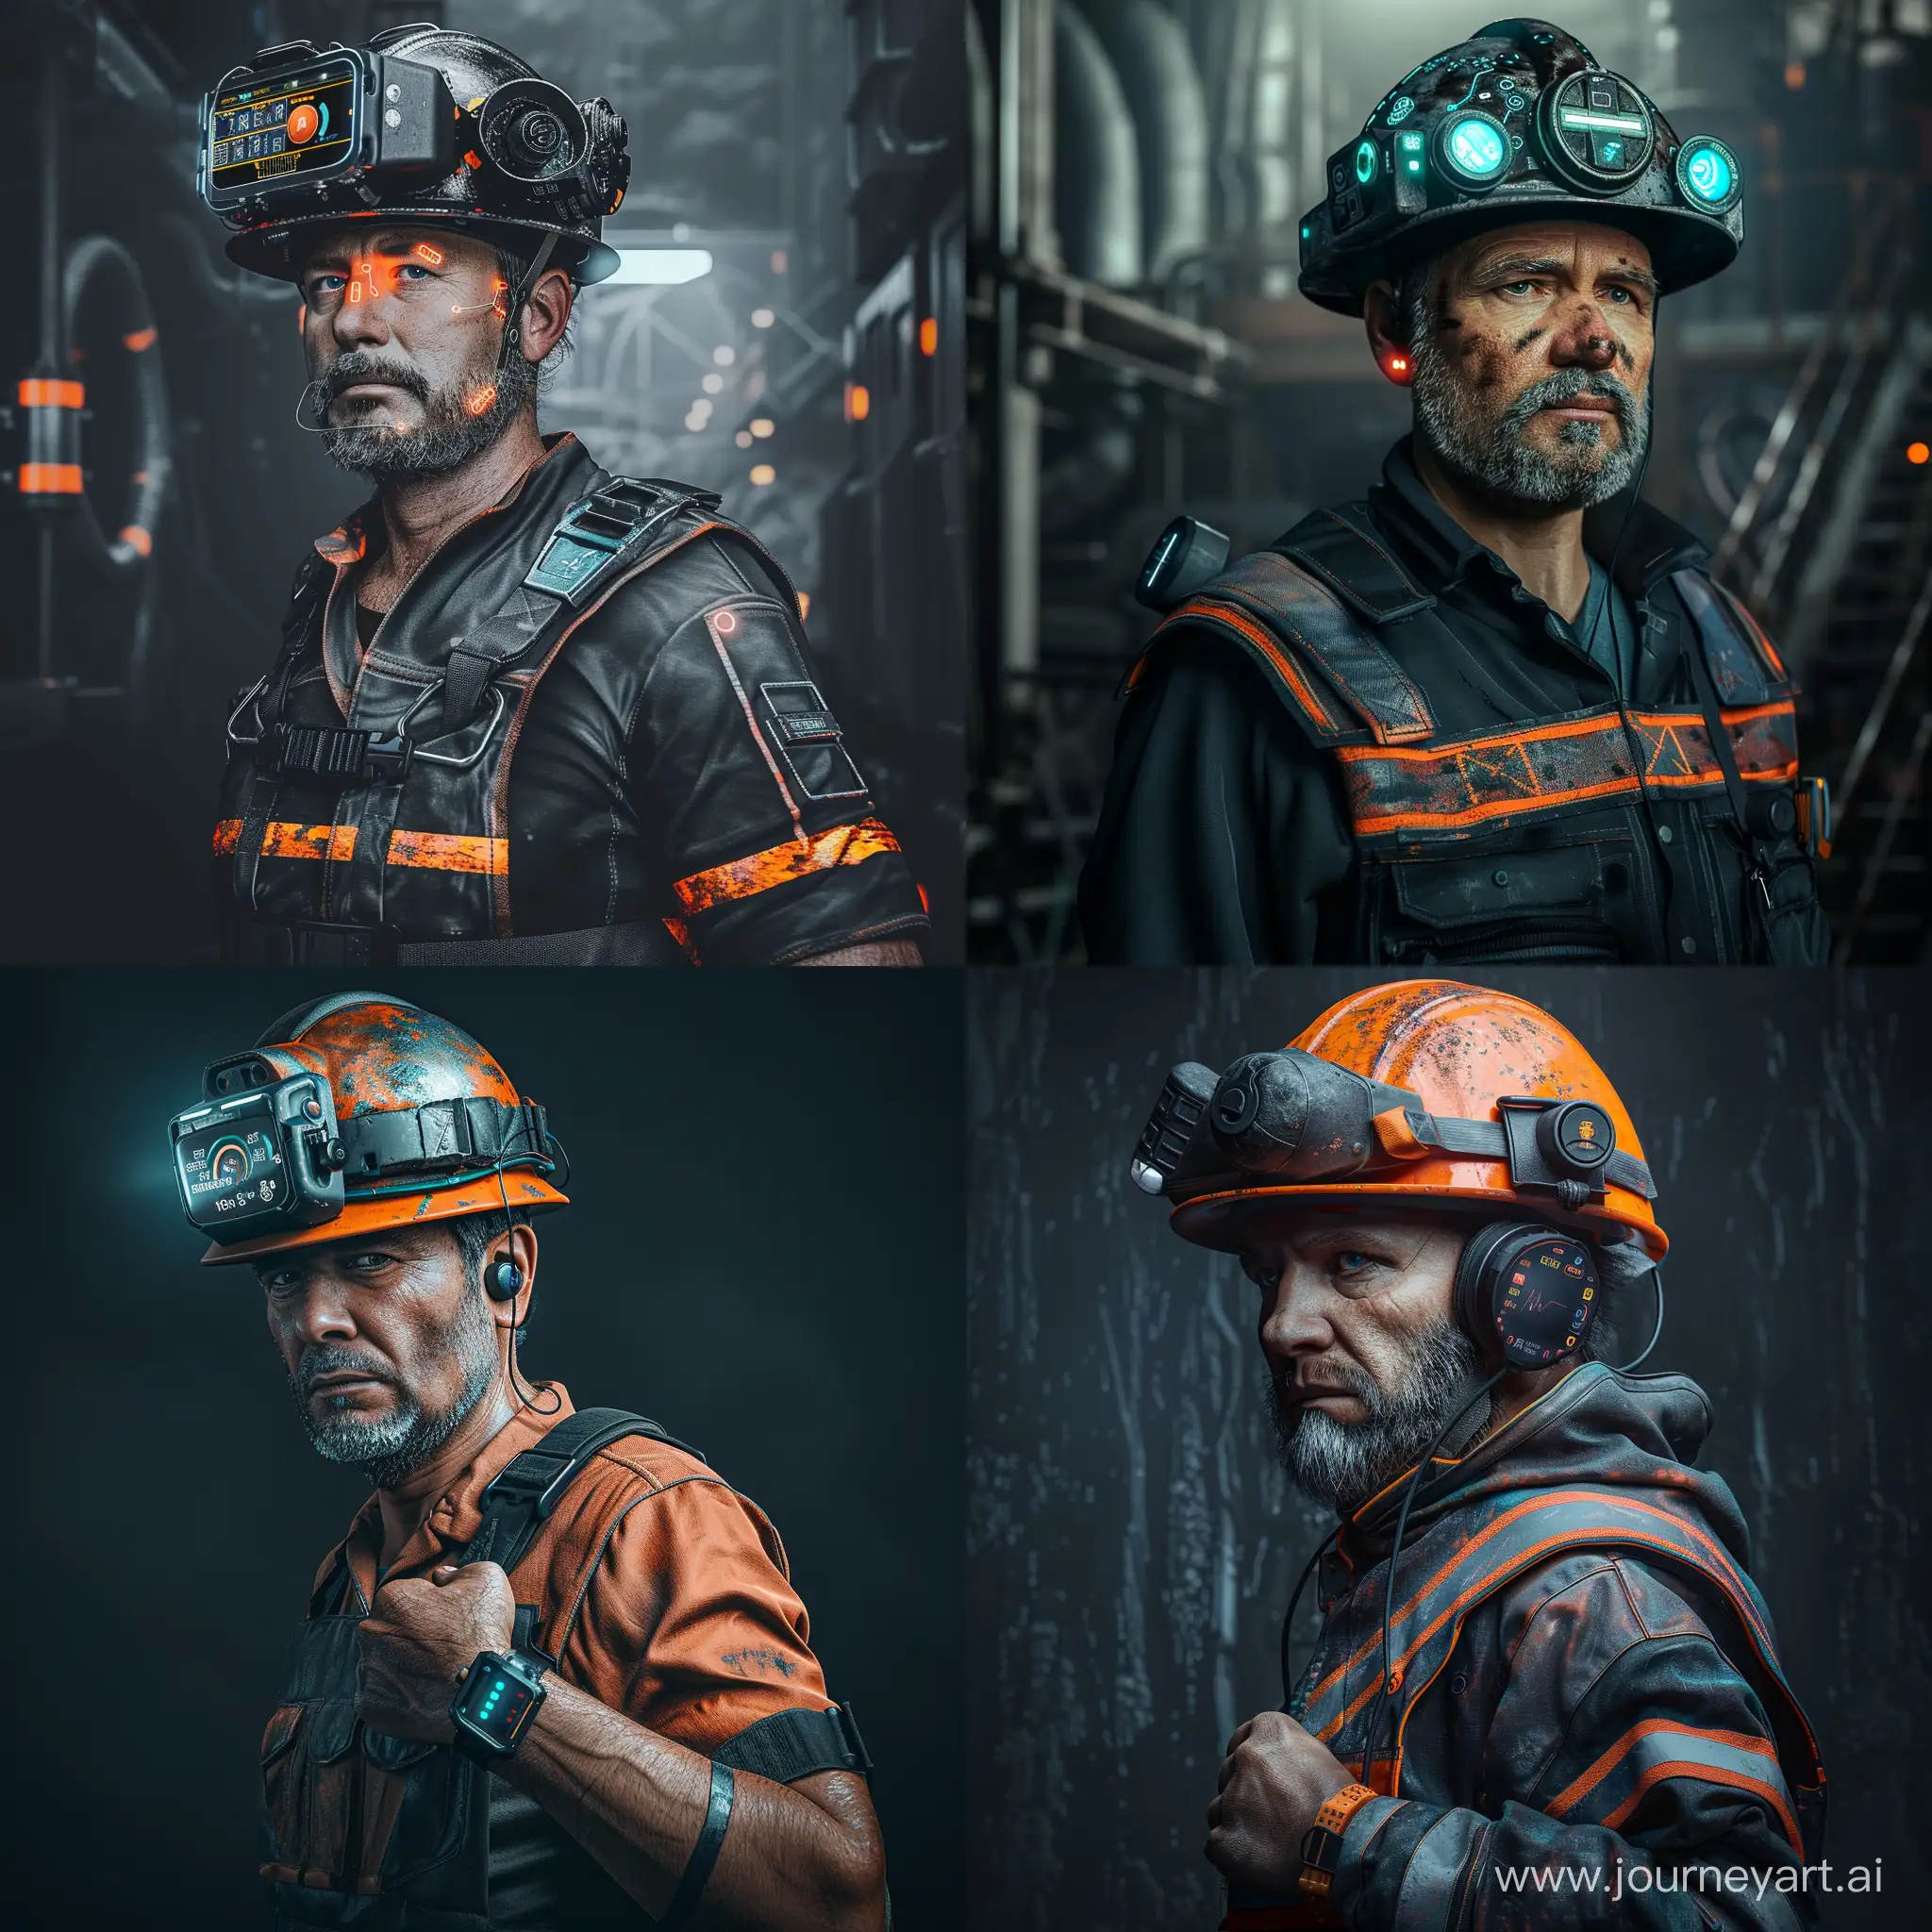 Professional-Miner-in-Smart-Safety-Gear-Exploring-Underground-Mine